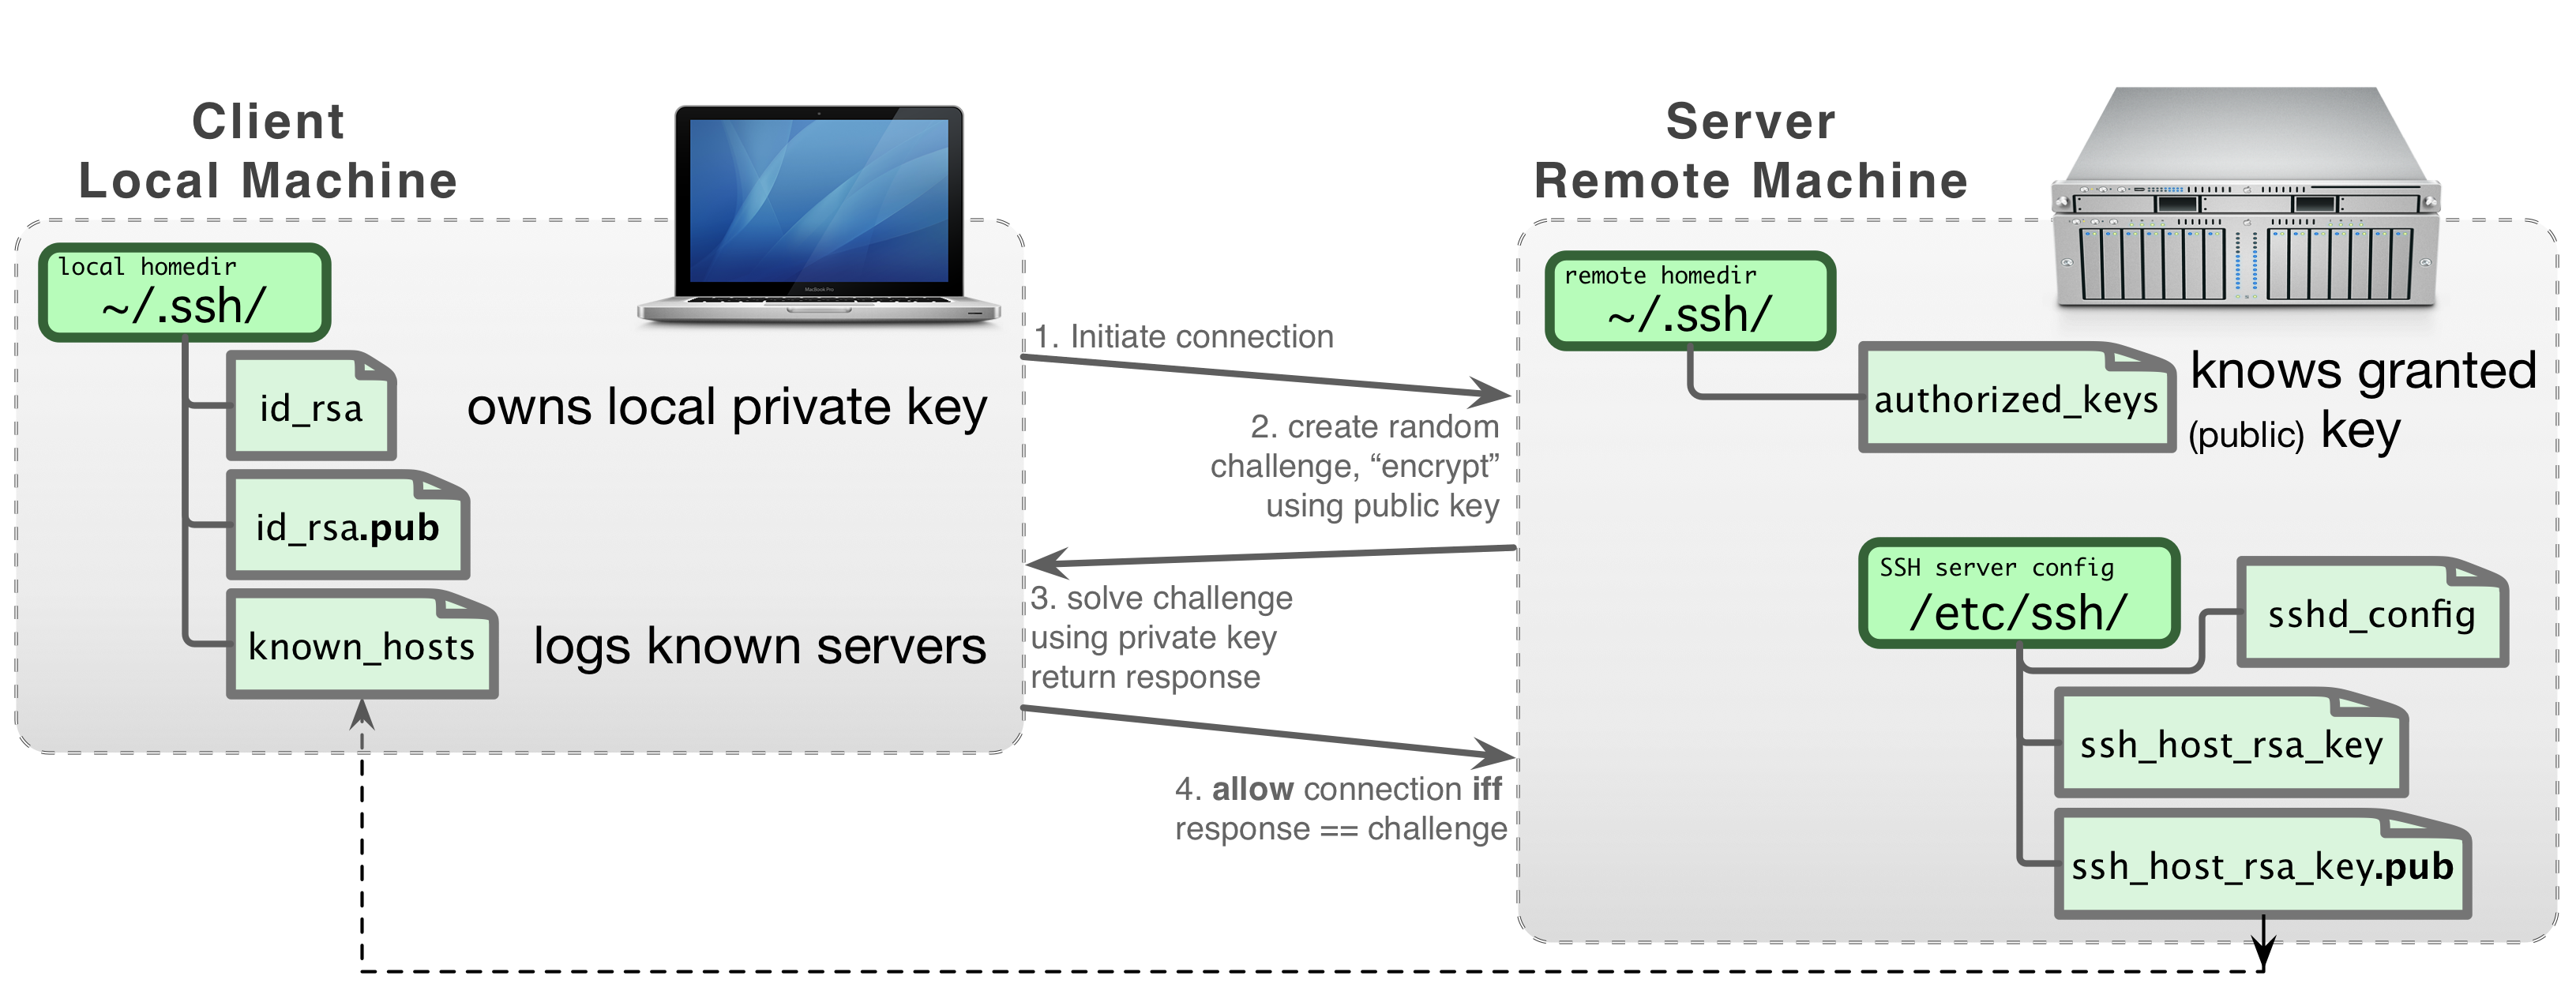 SSH key management